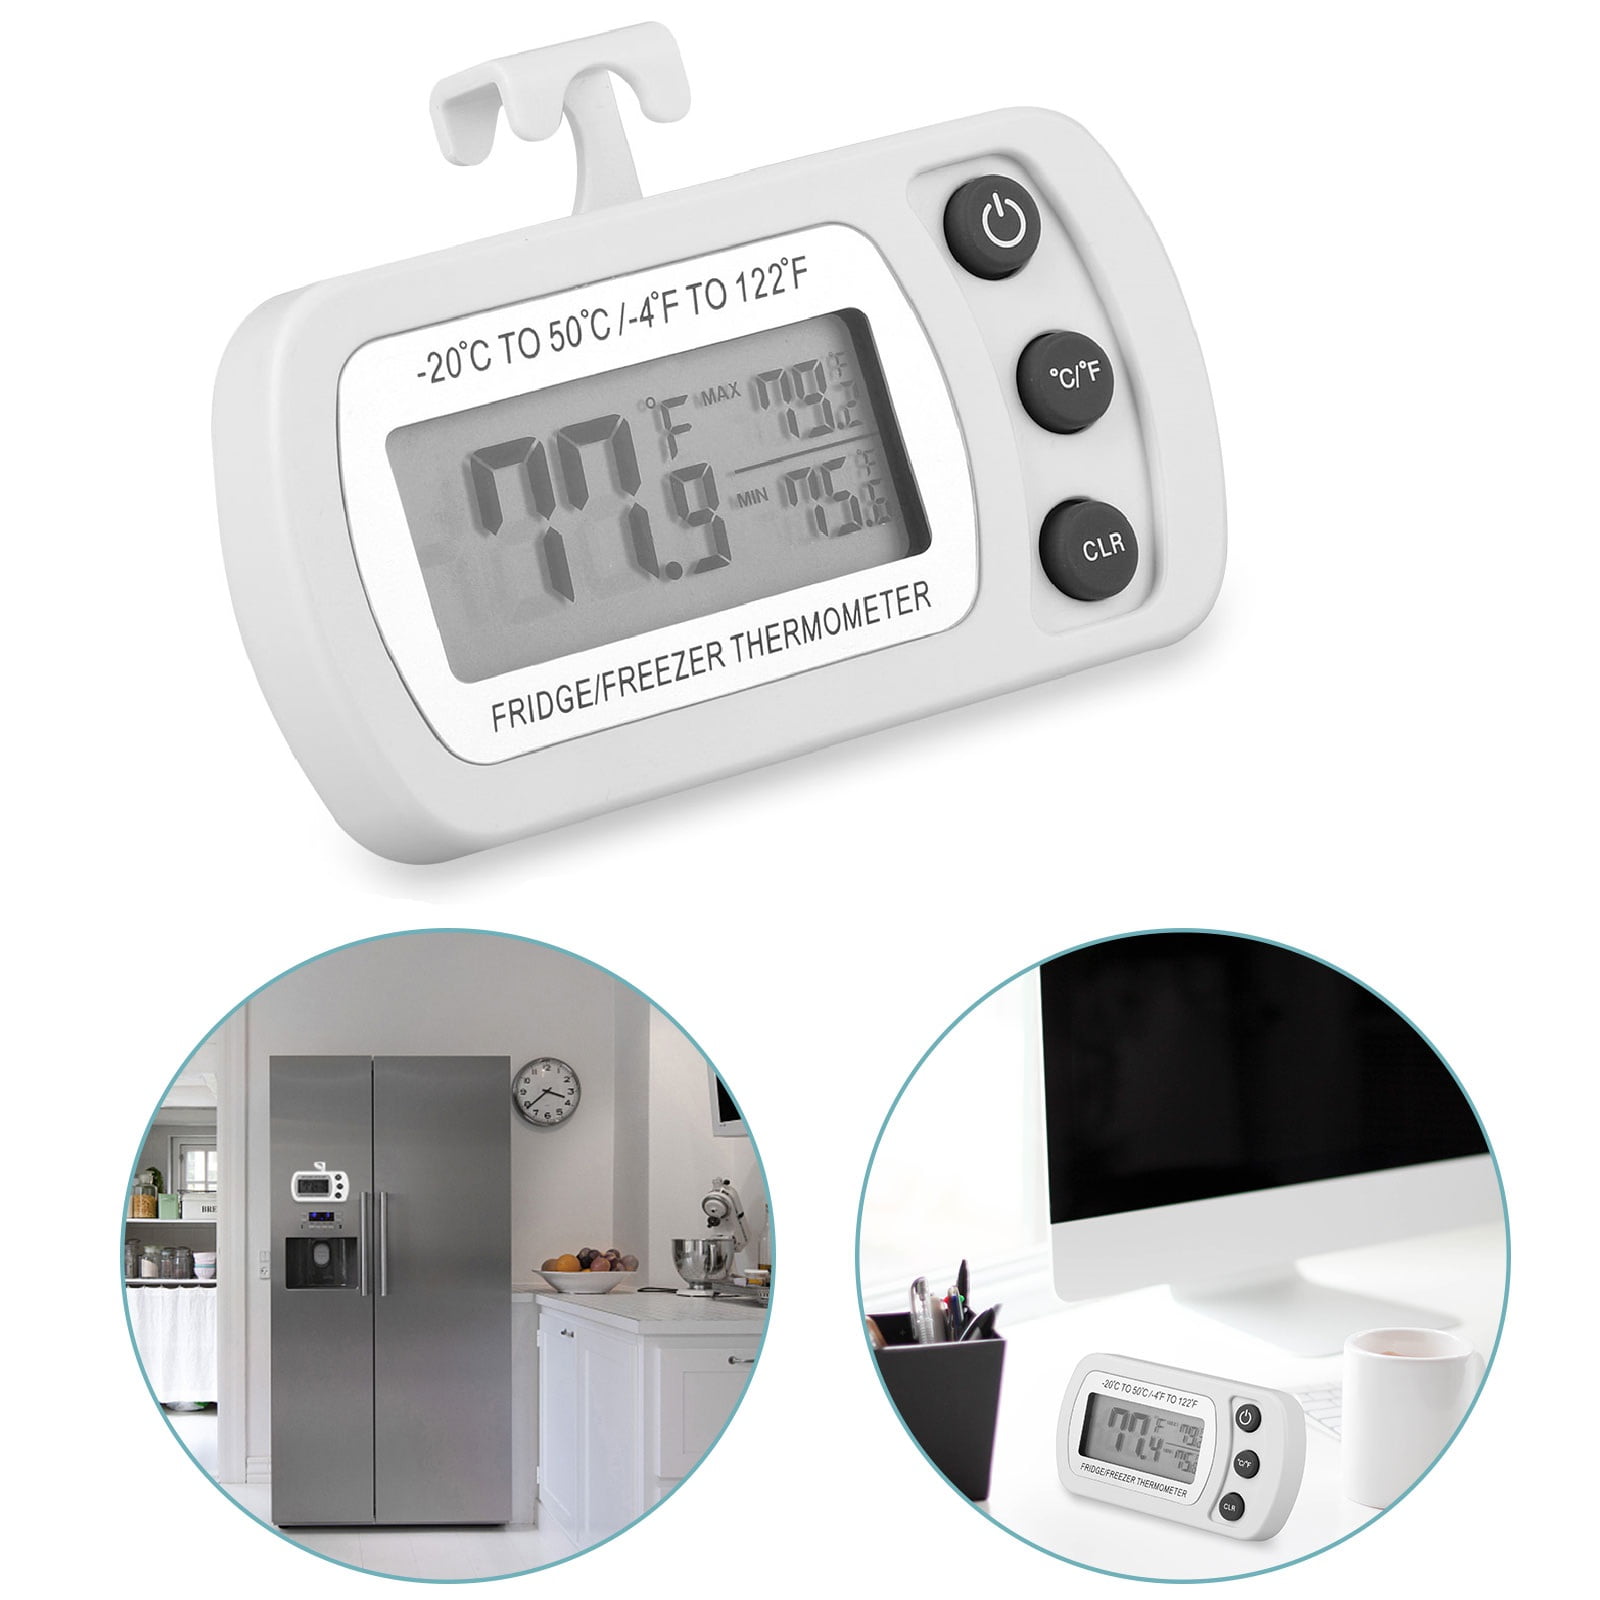 1# High Precision Electronic Waterproof Thermometer Hanging Wall-Mounted Electronic Thermometer with Magnet for Refrigerator Fridge Freezer Temperature